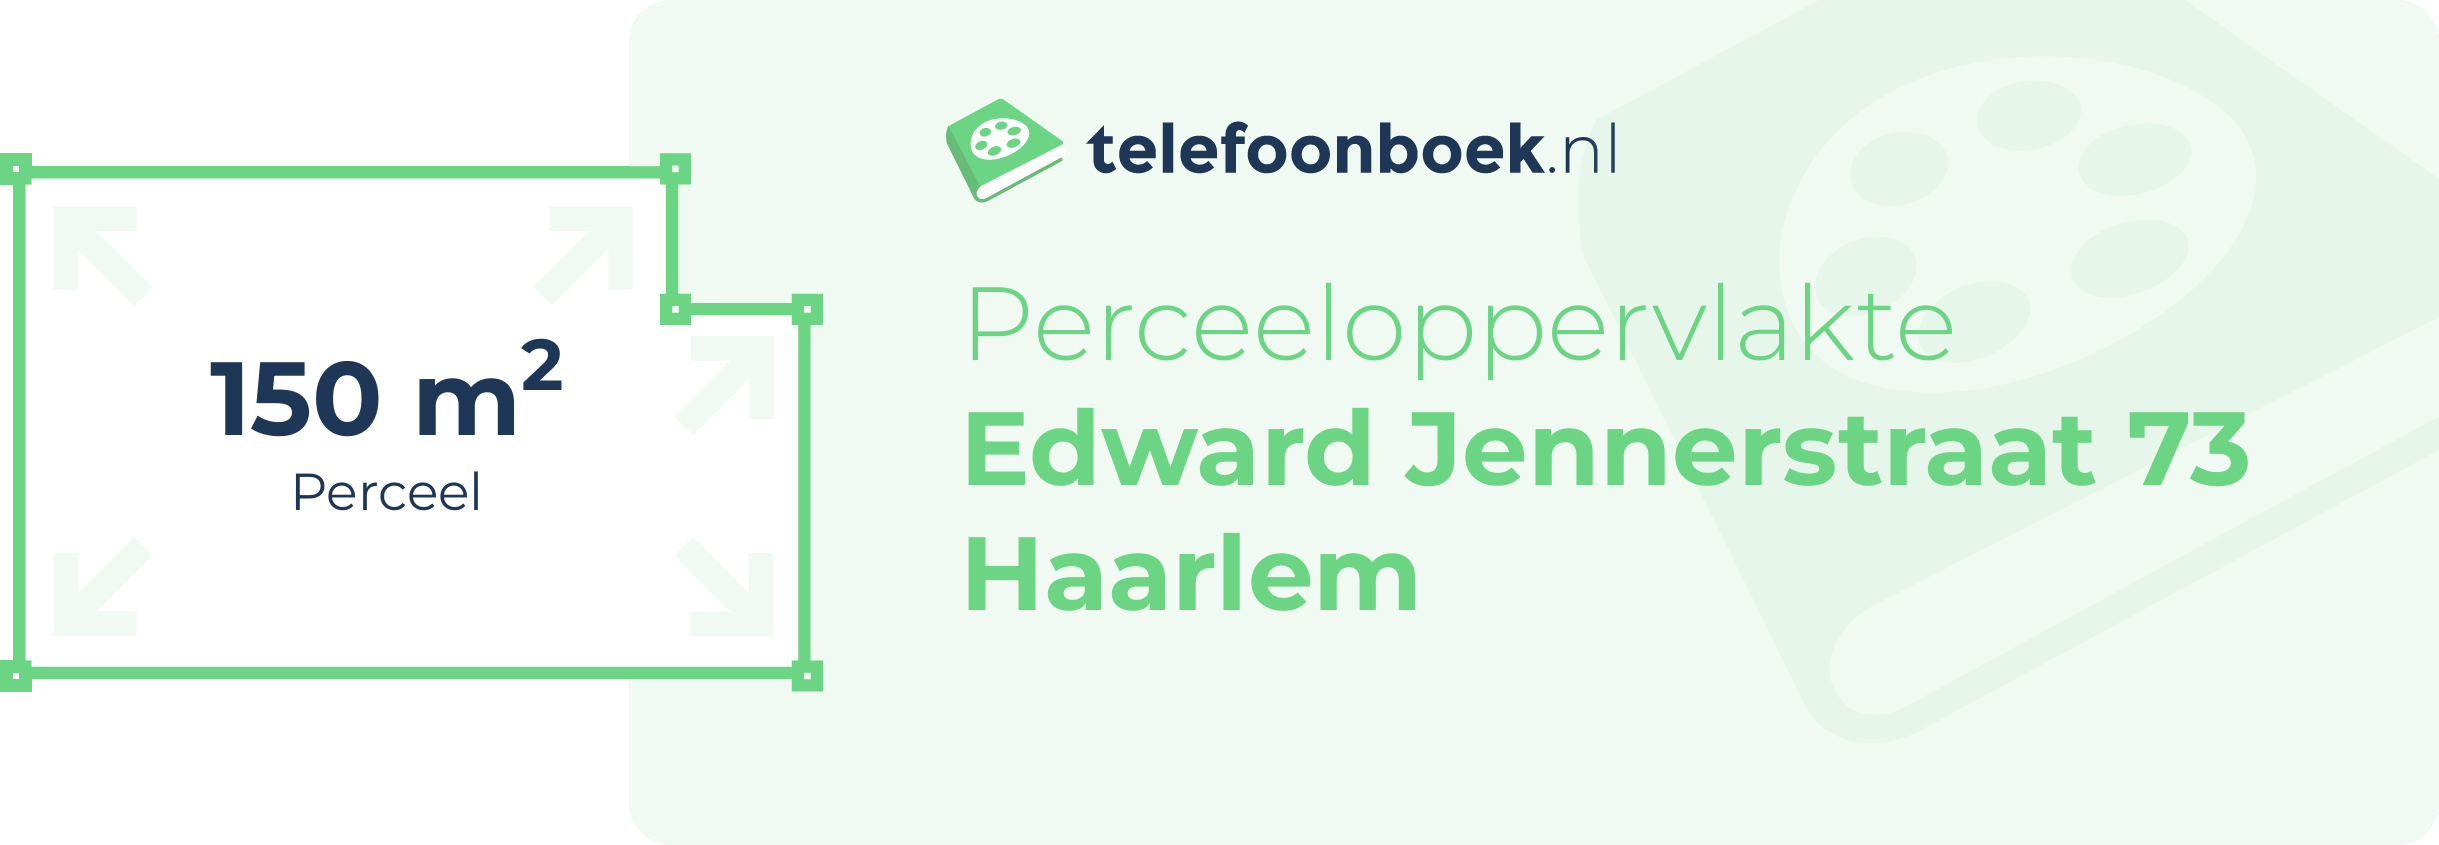 Perceeloppervlakte Edward Jennerstraat 73 Haarlem